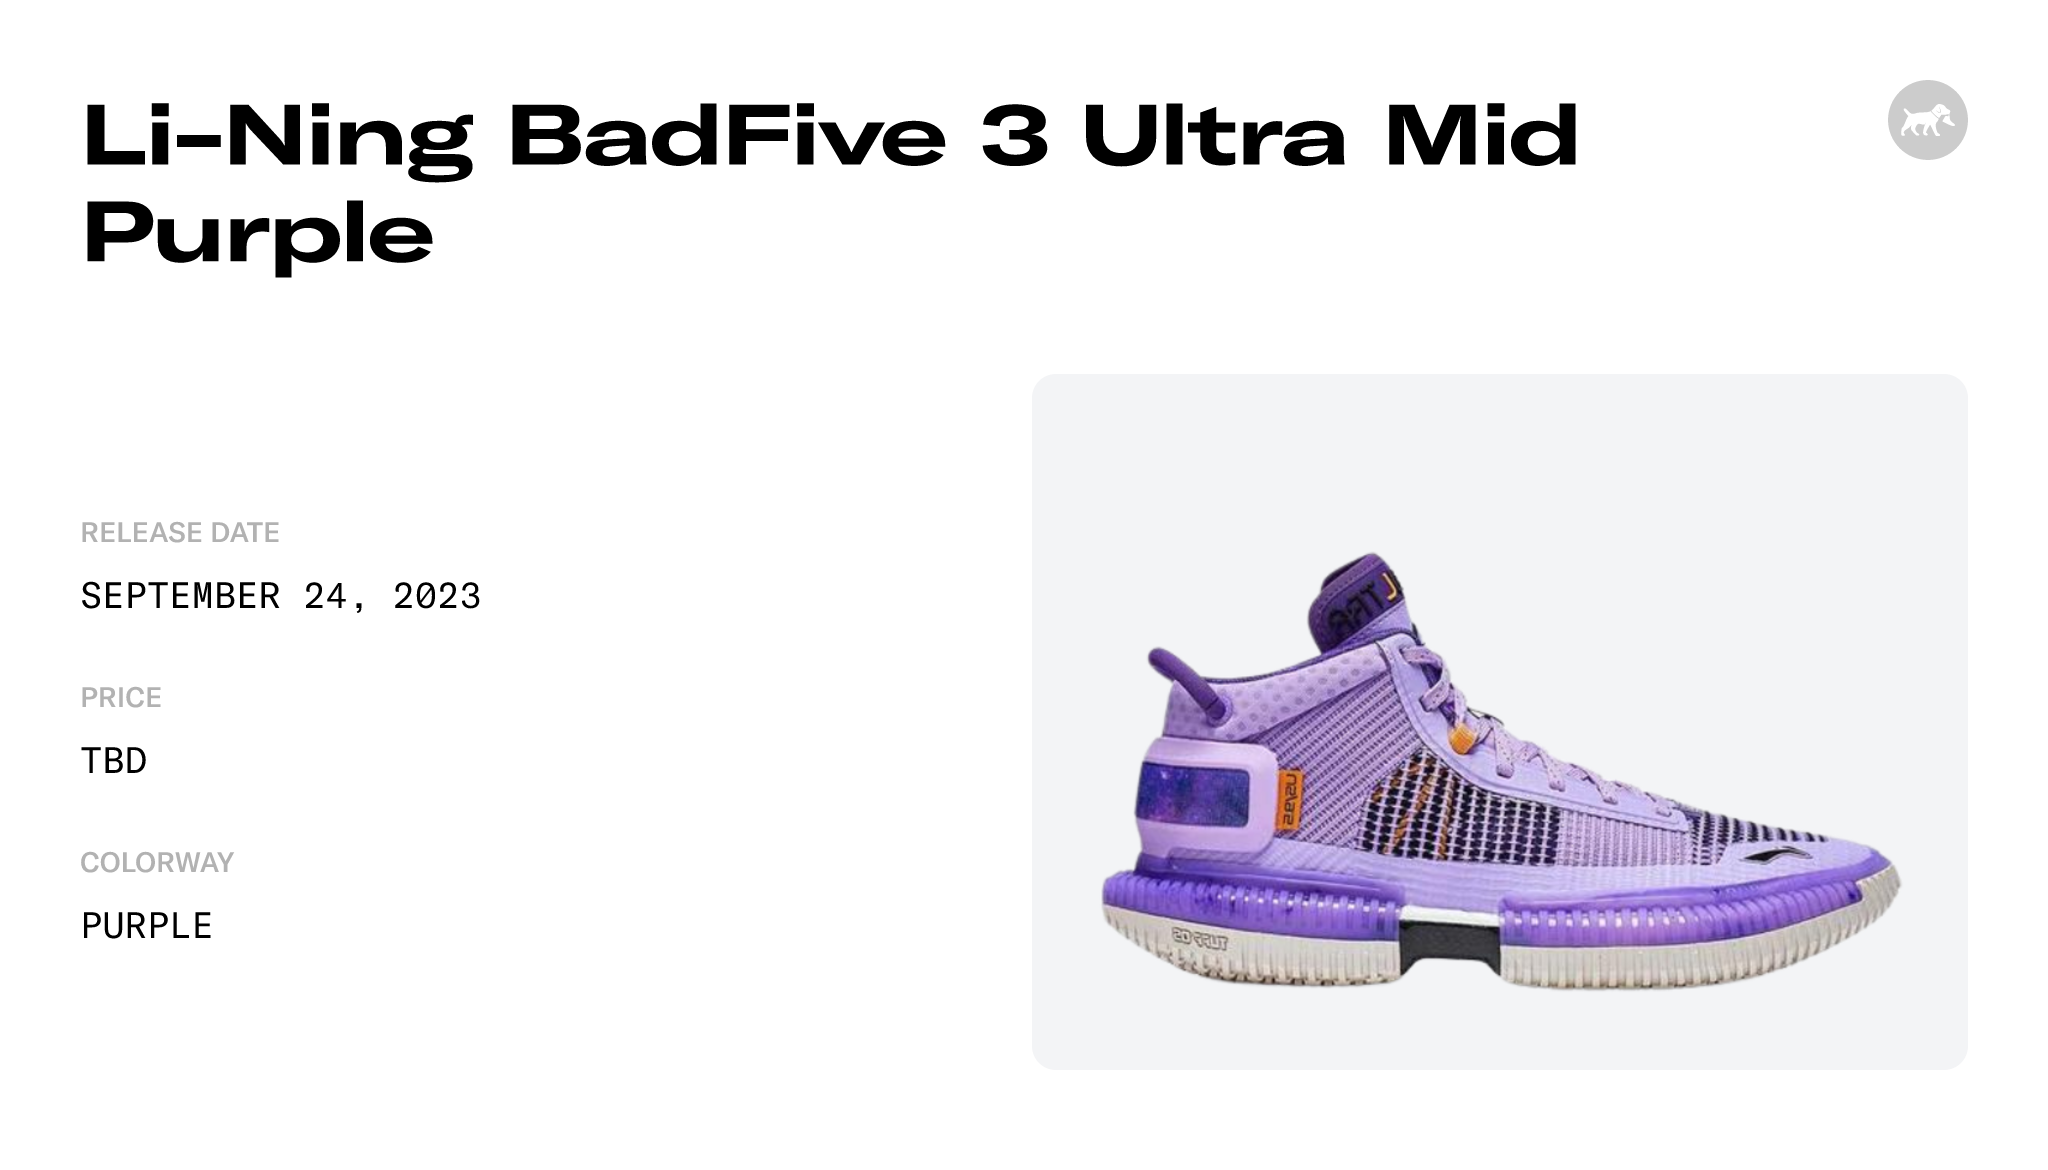 Li-Ning BadFive 3 Ultra Mid Purple - ABFS011-10 Raffles and Release Date